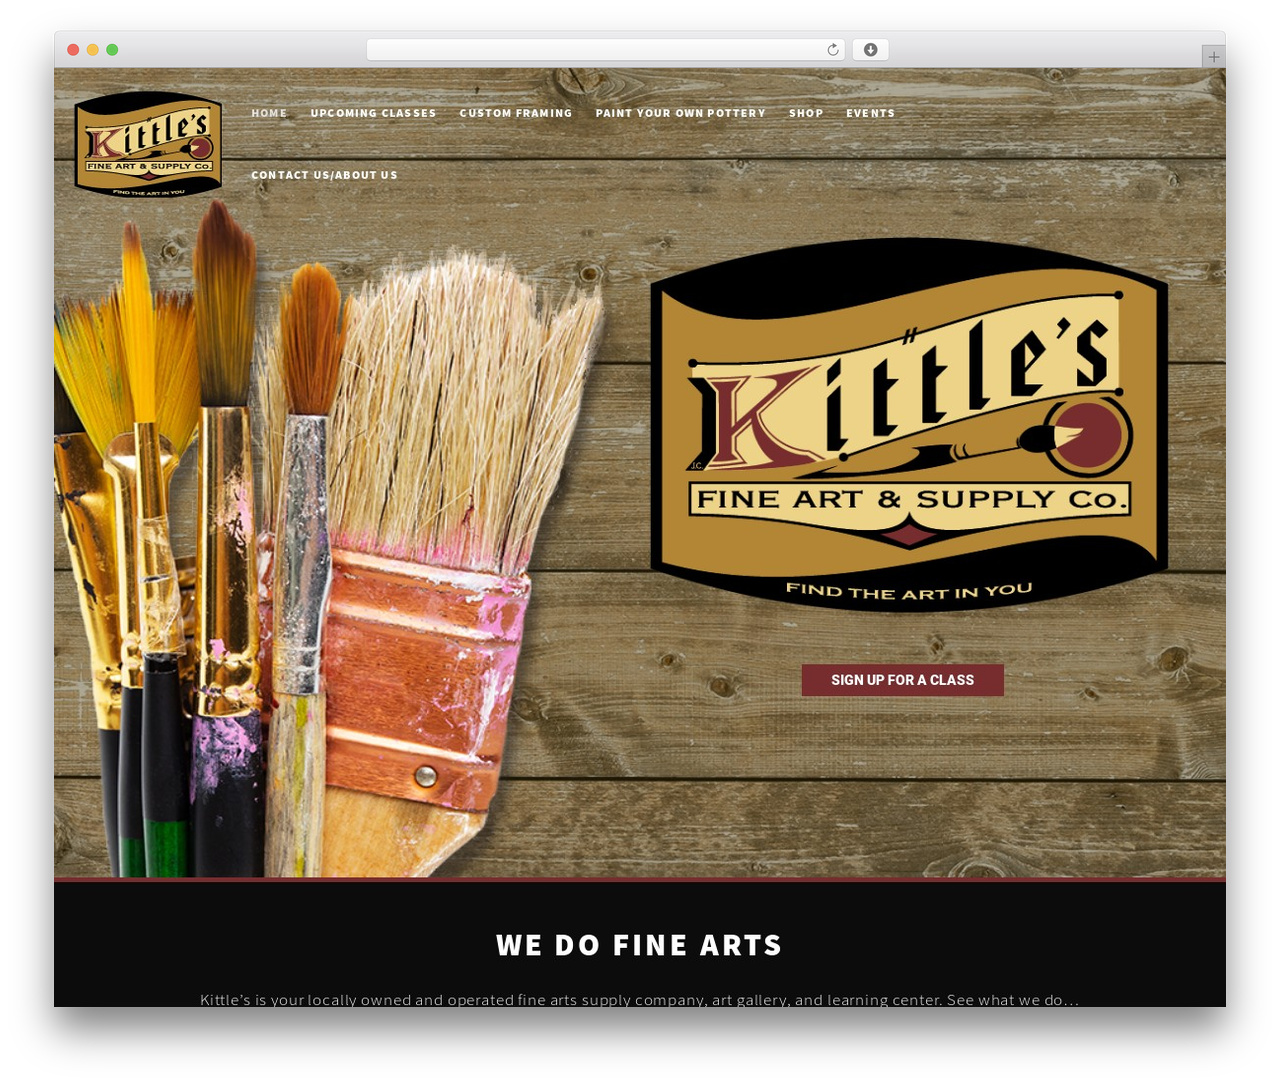 Kittle's Fine Art & Supply Company – Art supplies, galleries